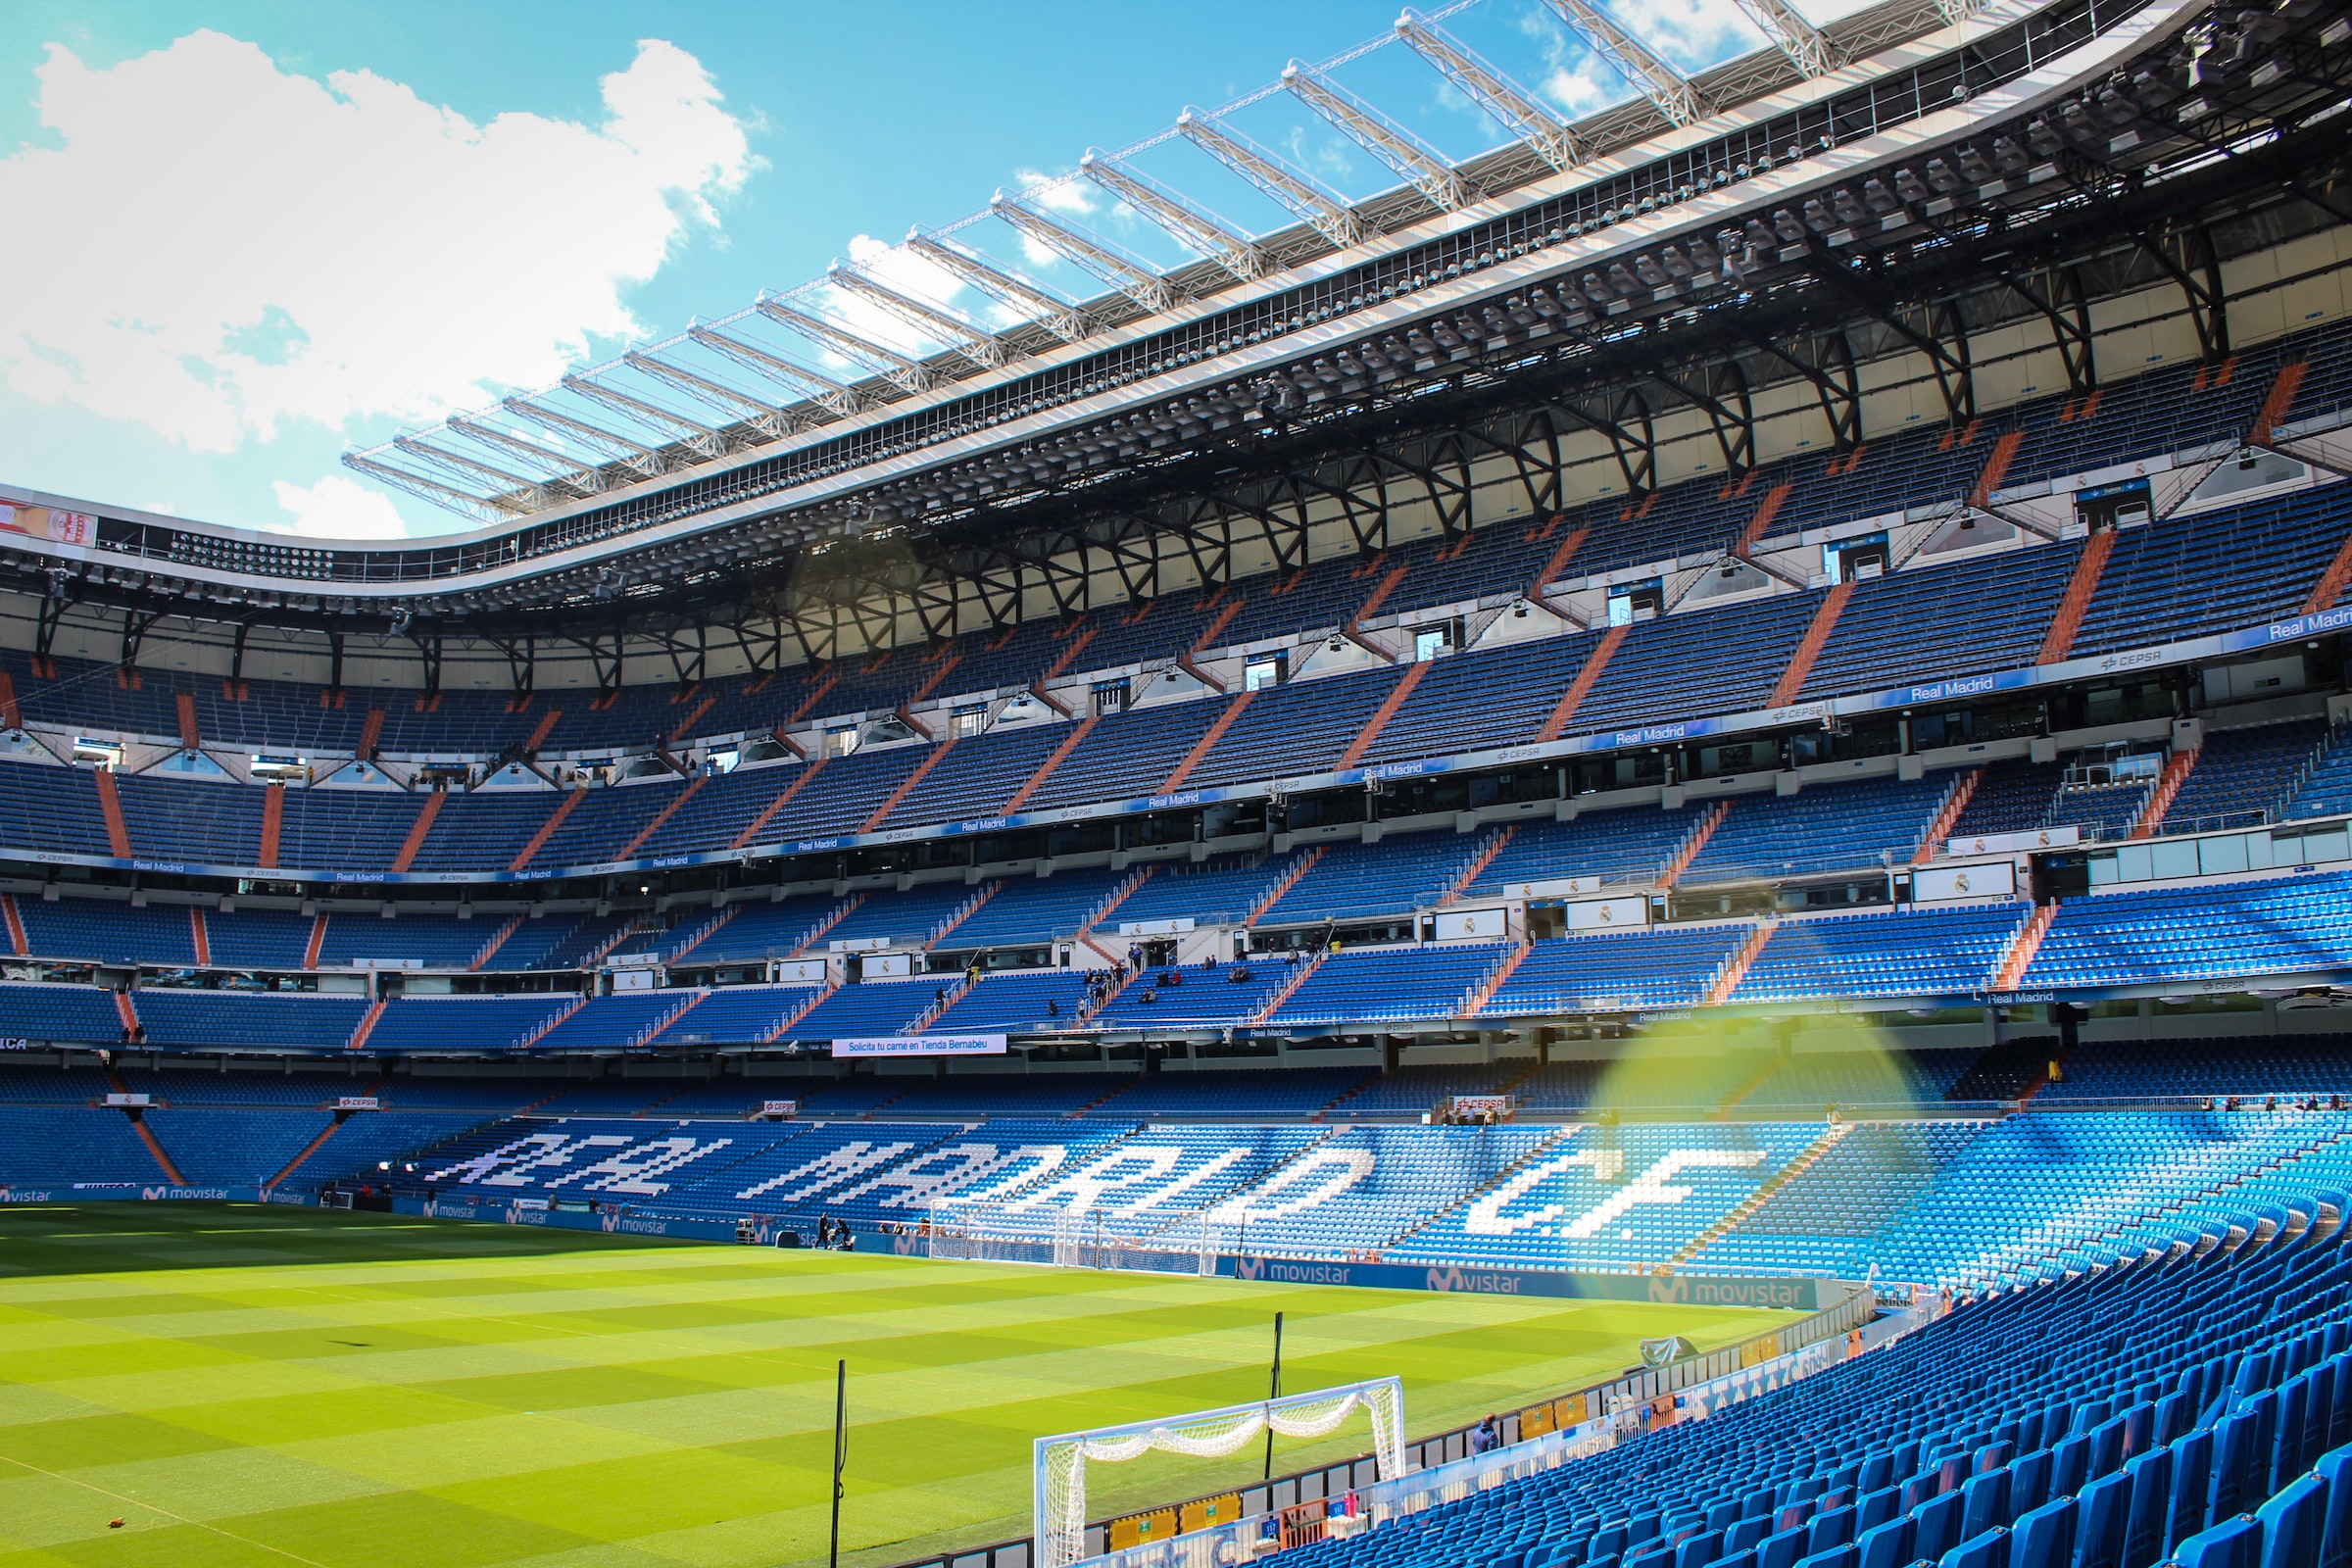 Bernabeu Stadium of Real Madrid in Madrid, Spain